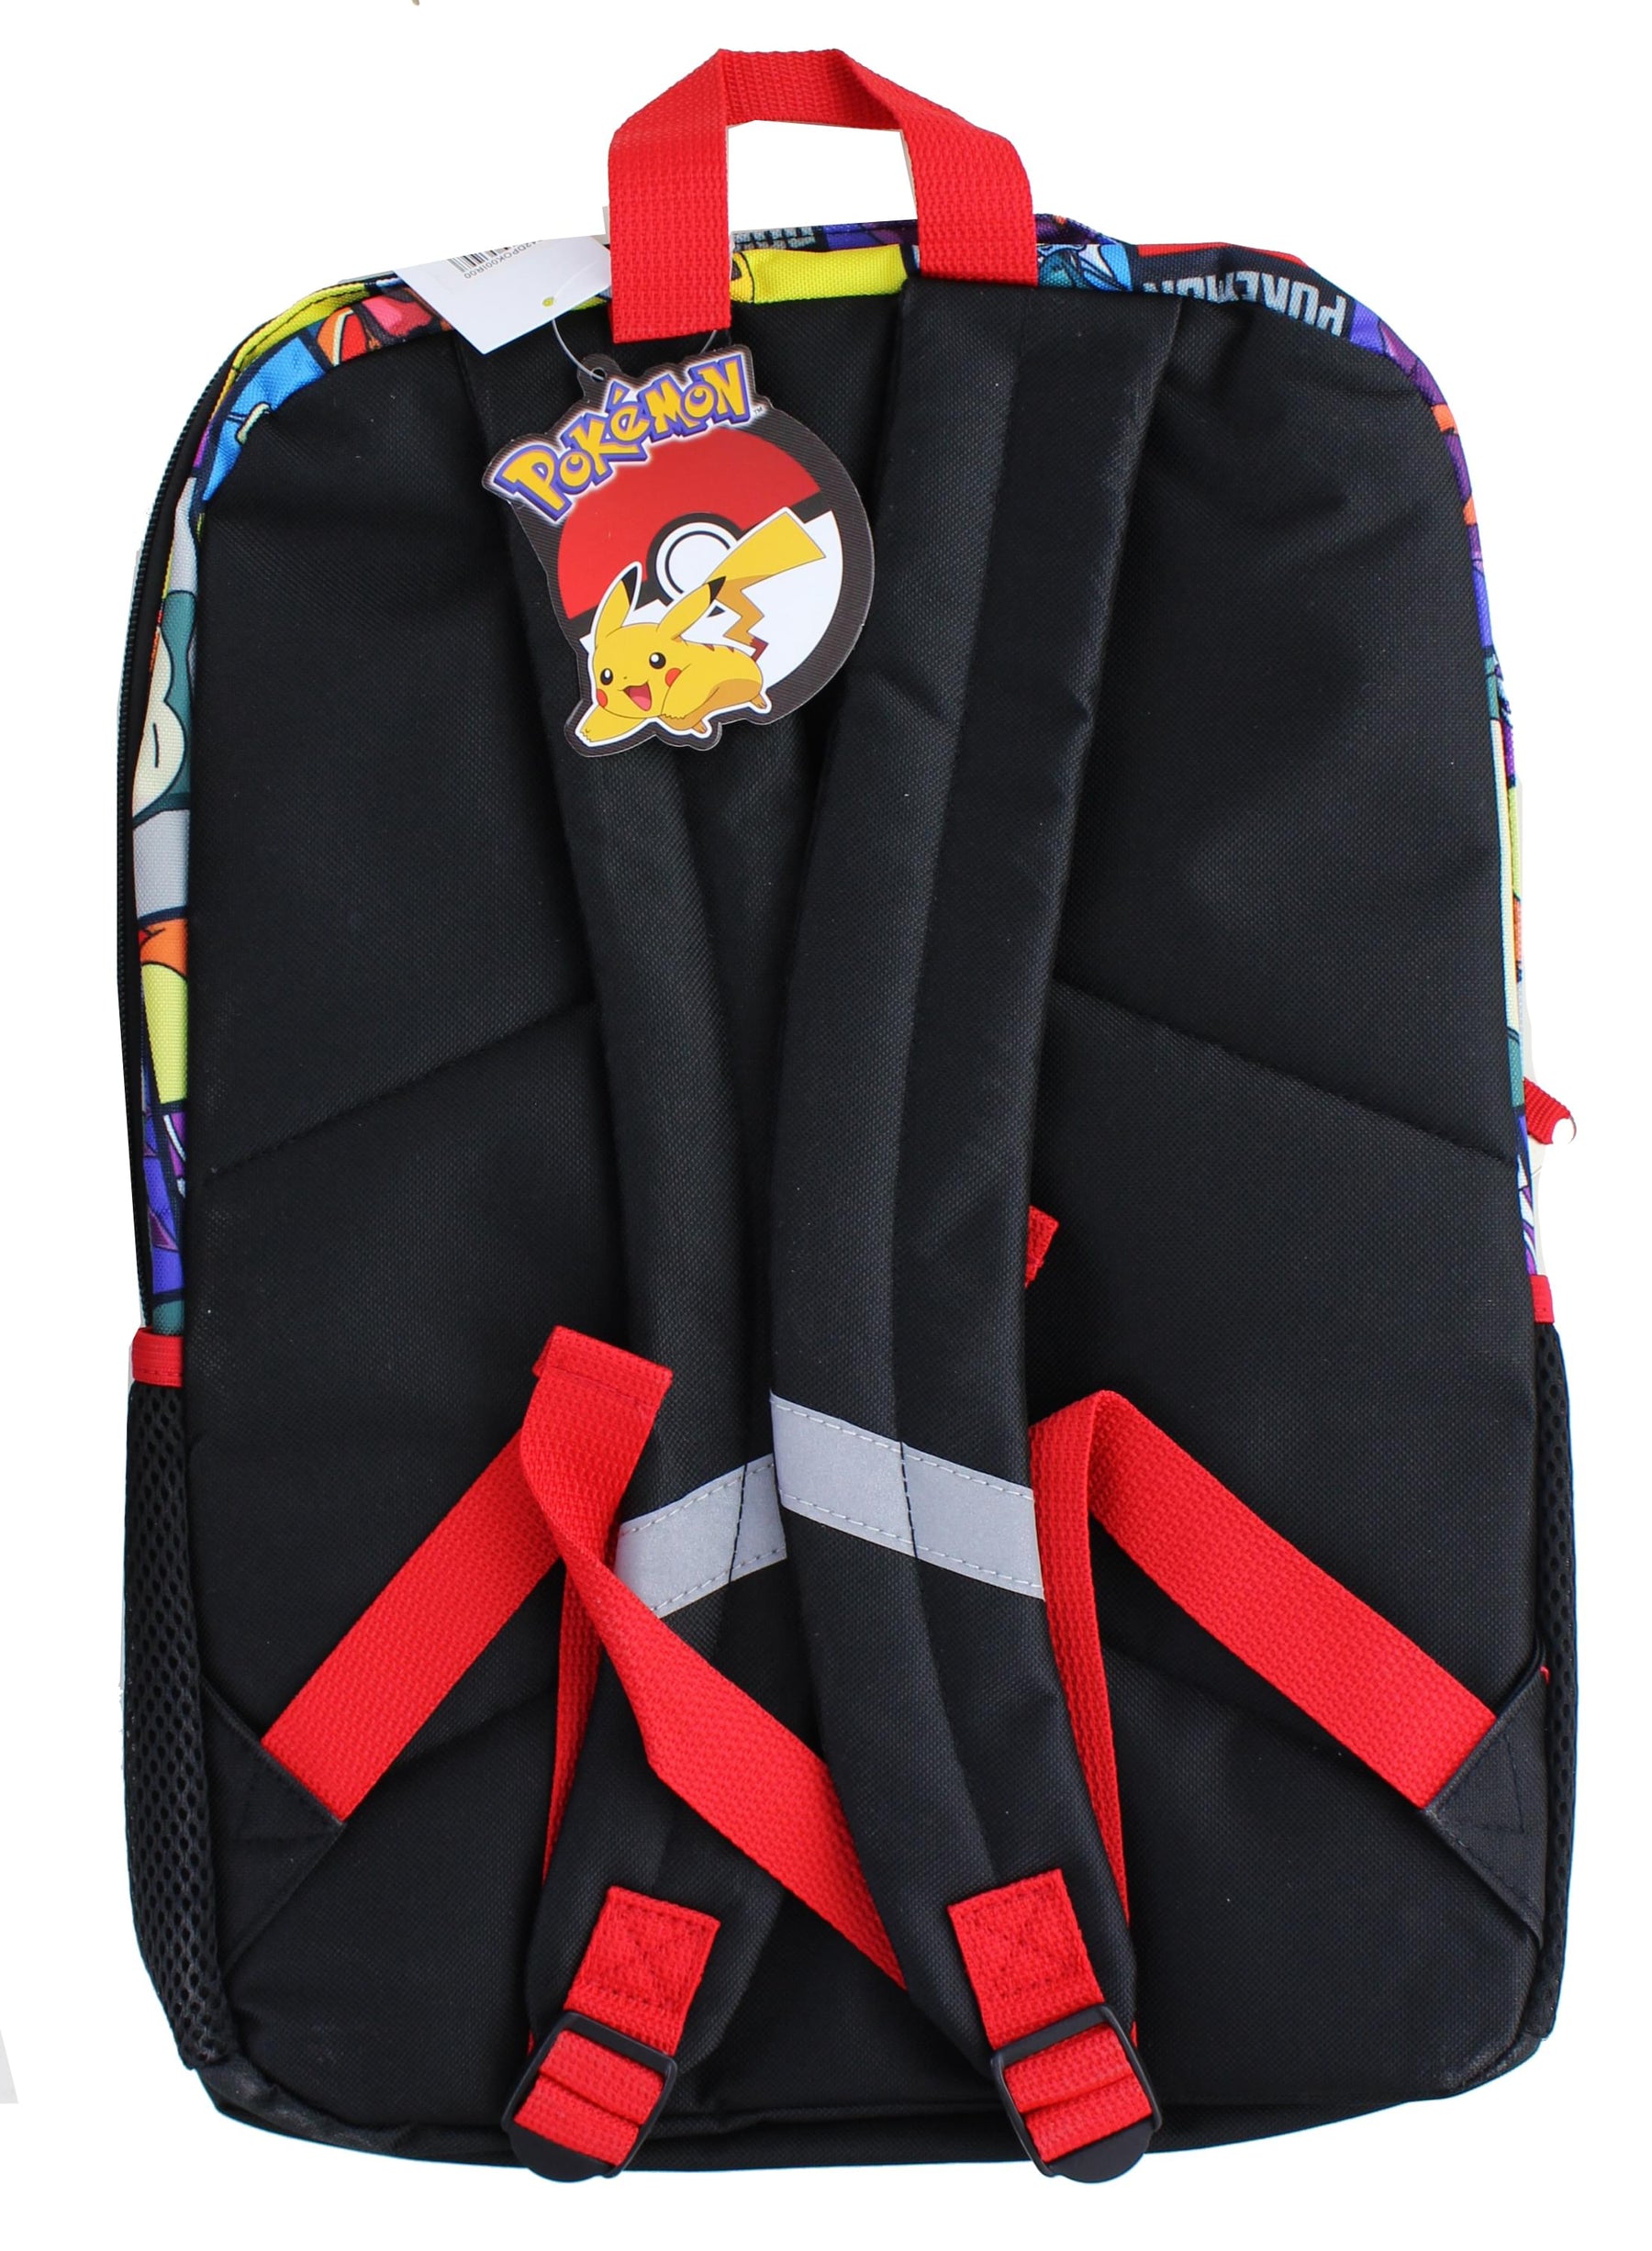 Pokemon Pikachu & Pokeball 16 Inch Kids Backpack